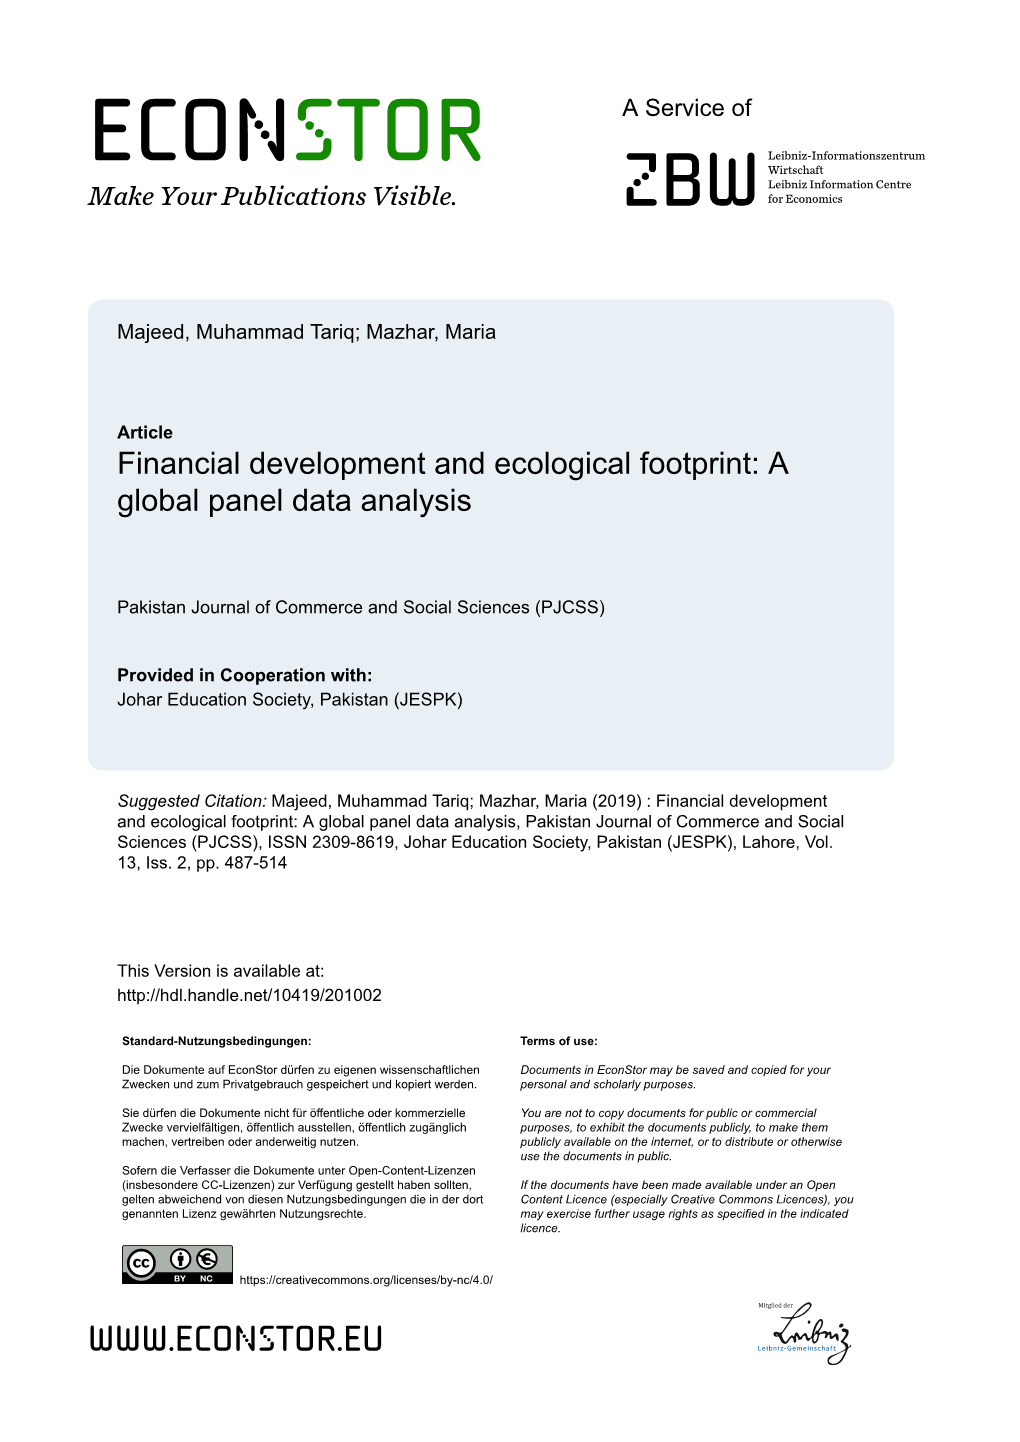 Financial Development and Ecological Footprint: a Global Panel Data Analysis